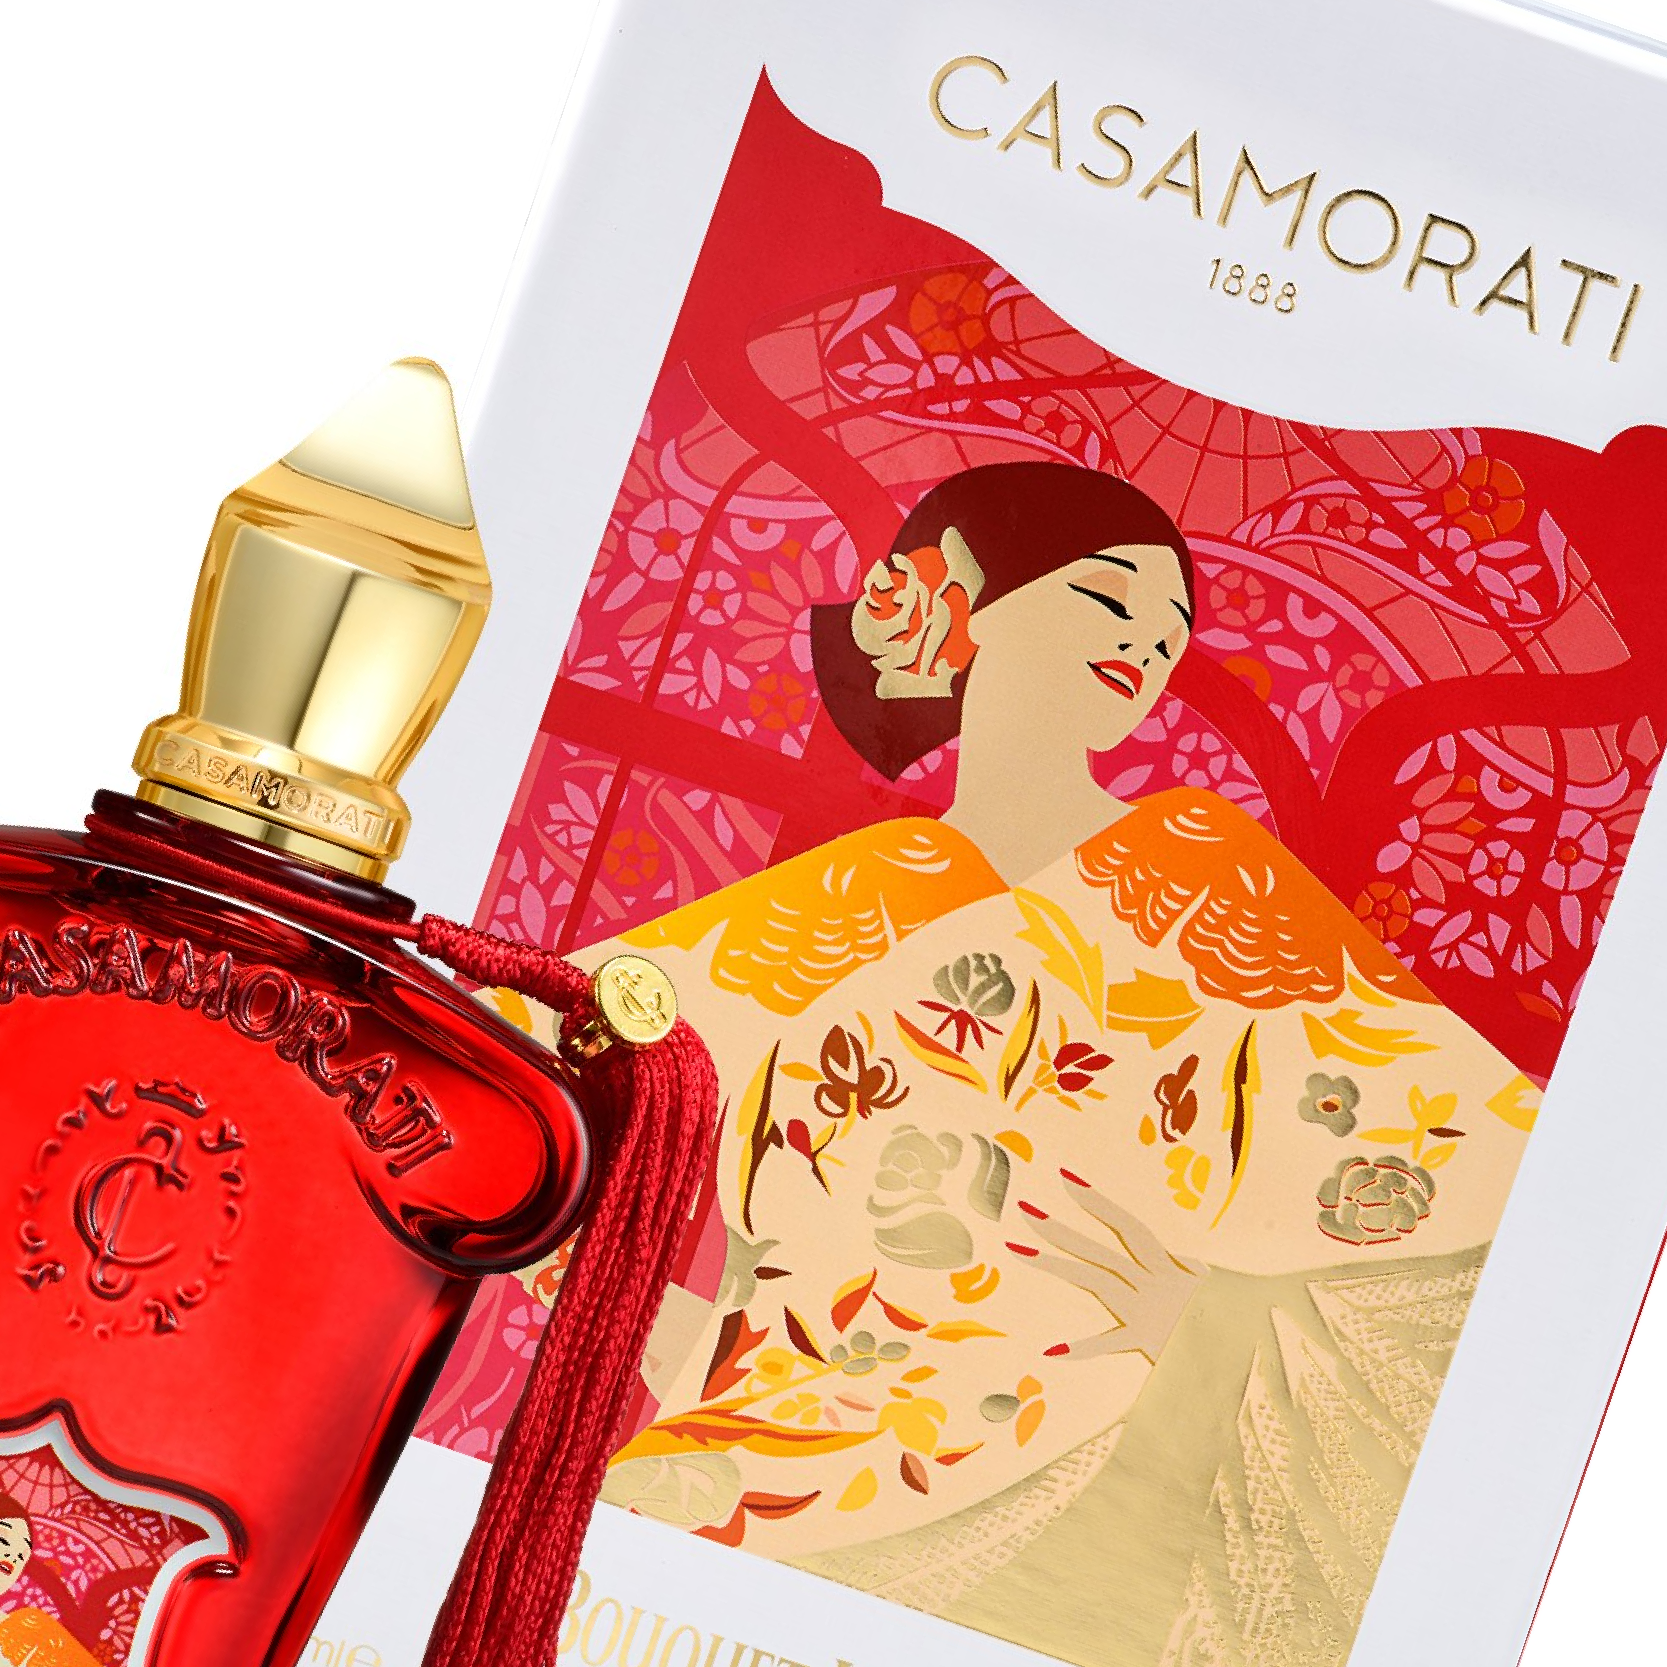 CASAMORATI - AAFKES │ distribution de parfums exclusifs